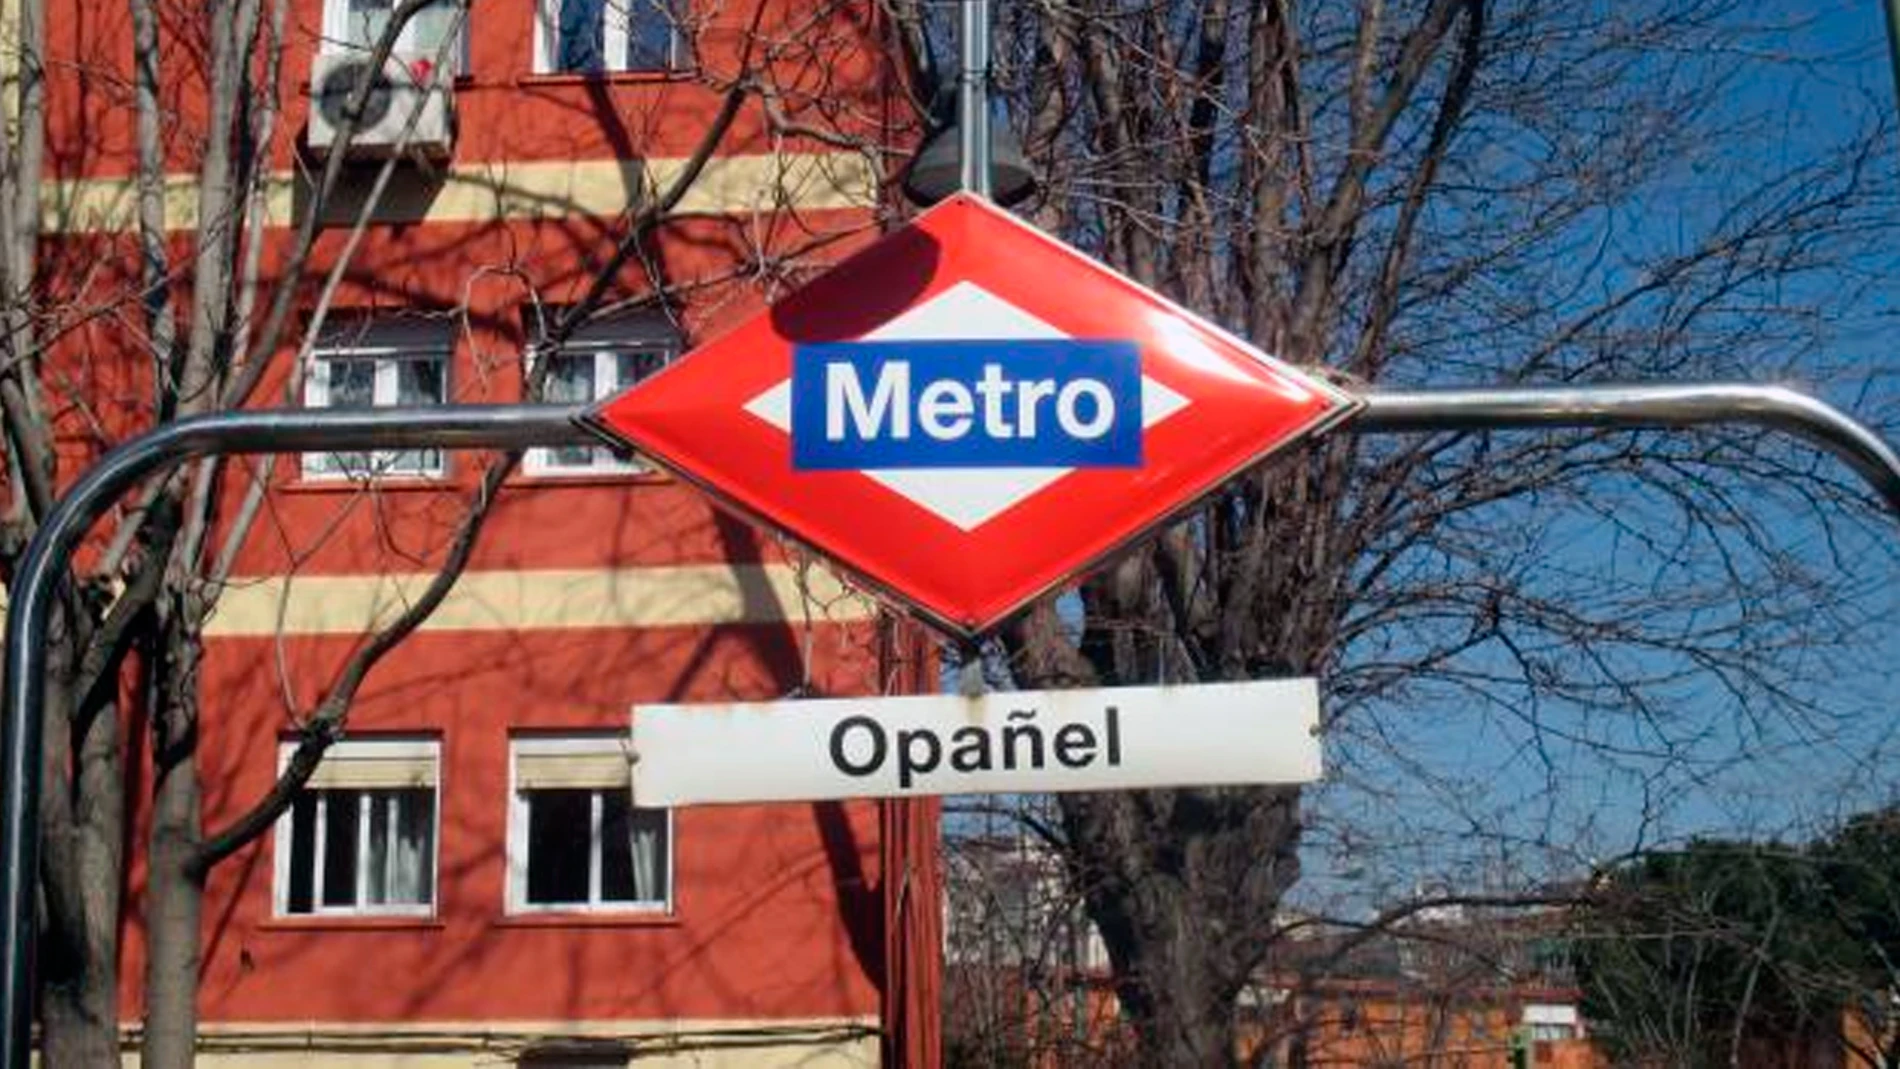 Parada de metro de Opañel, Madrid